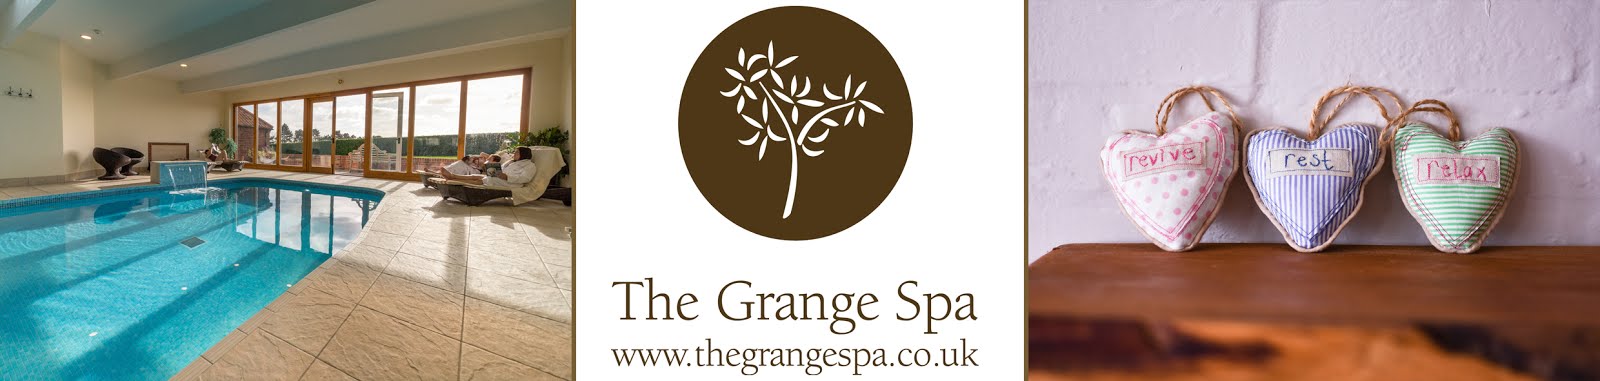 The Grange Spa